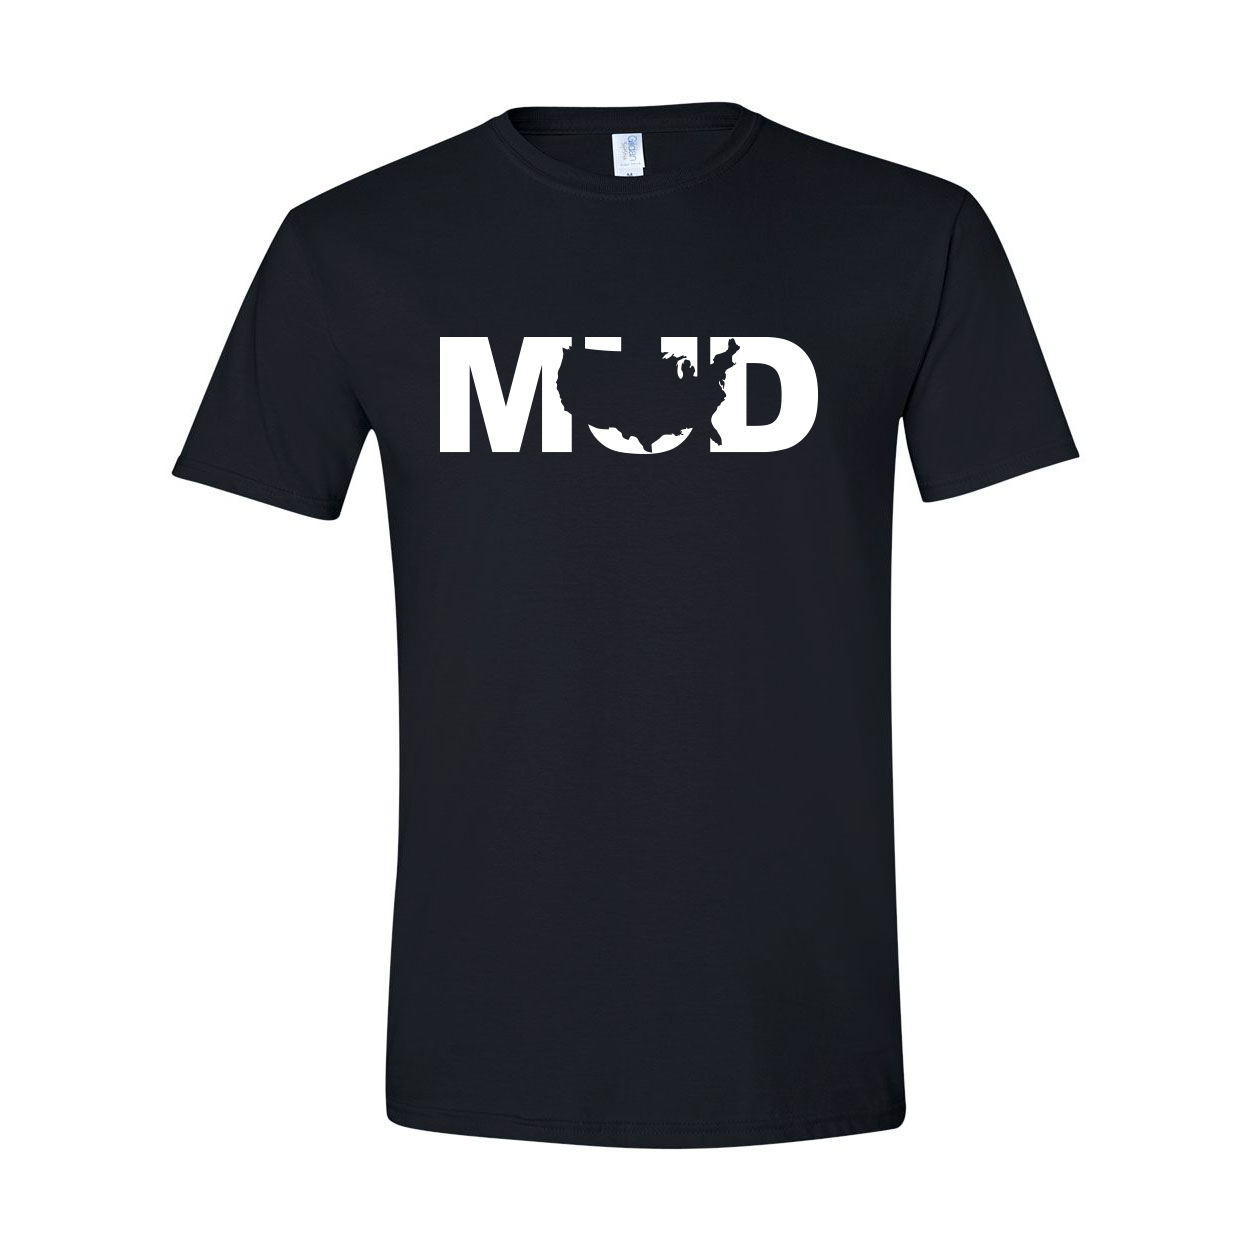 Mud United States Classic T-Shirt Black (White Logo)